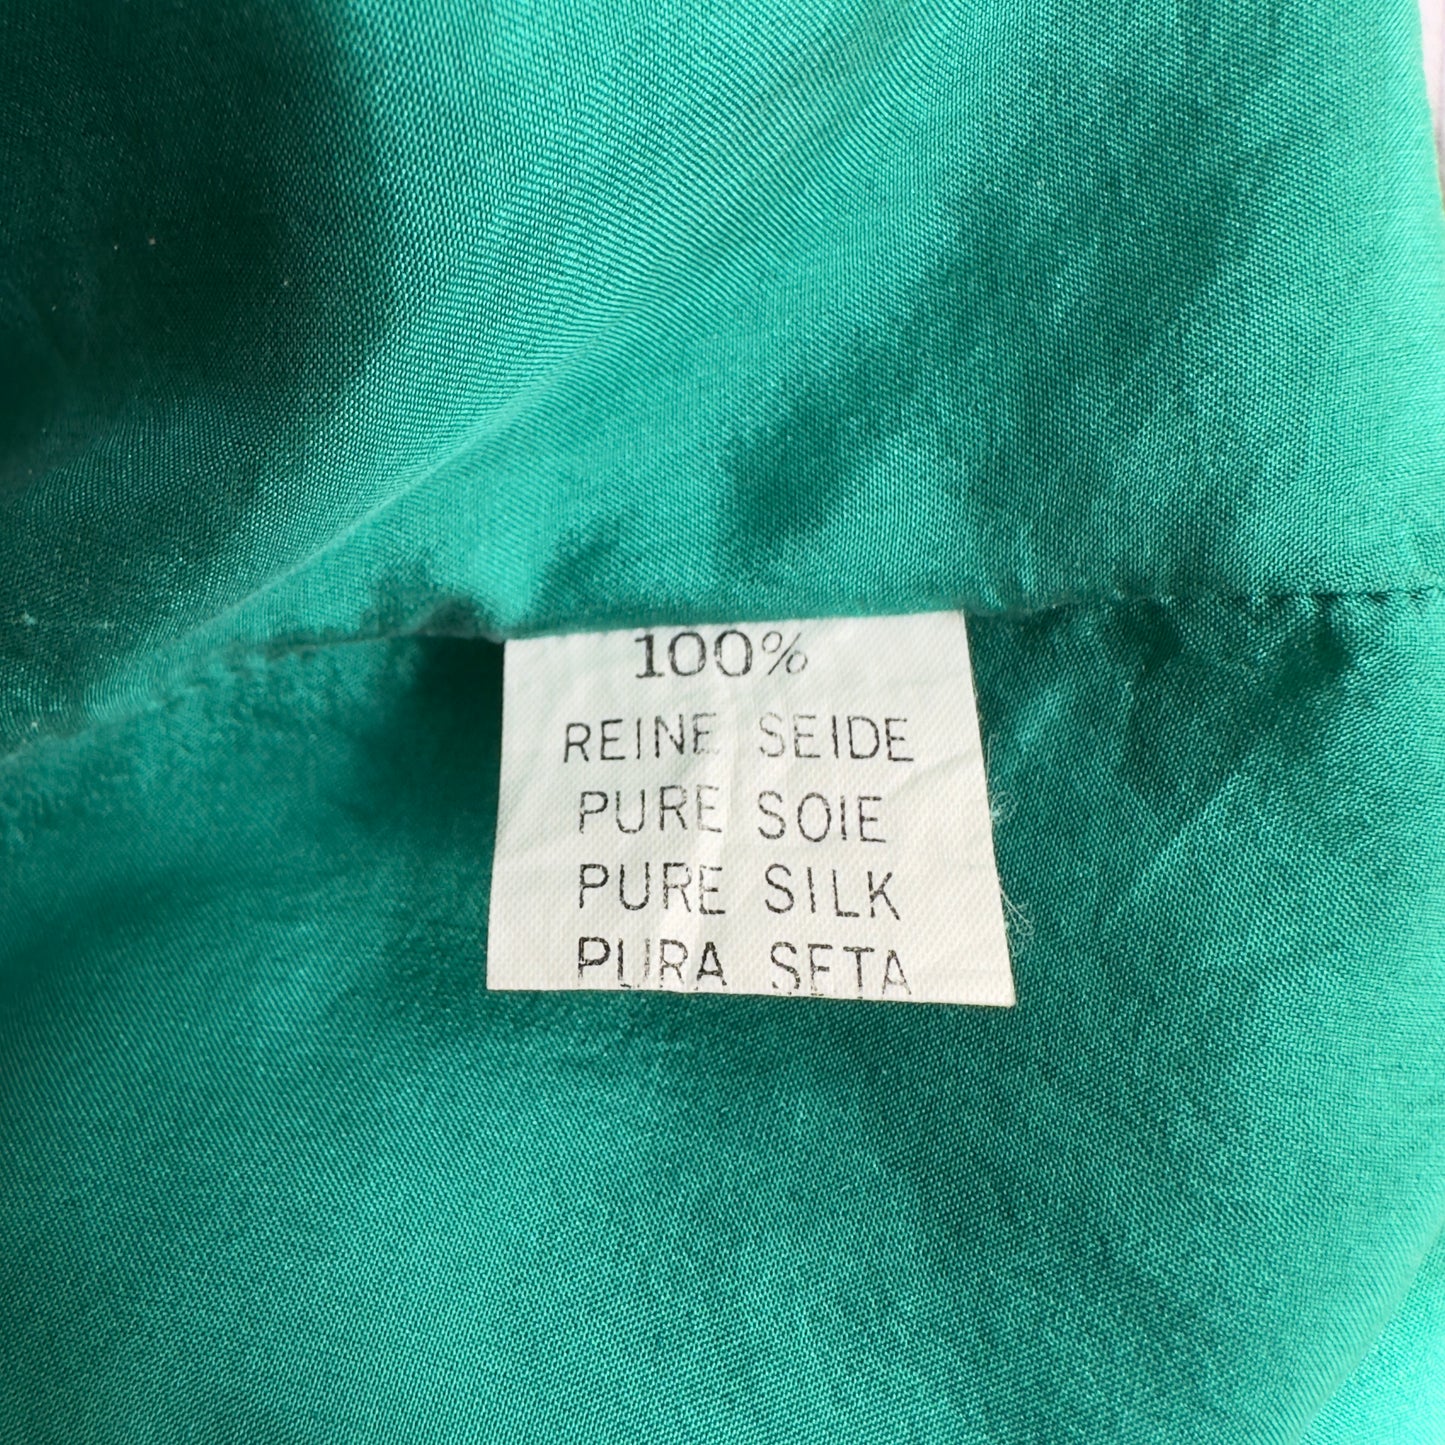 Vintage Turquoise Silk Shirt Dress